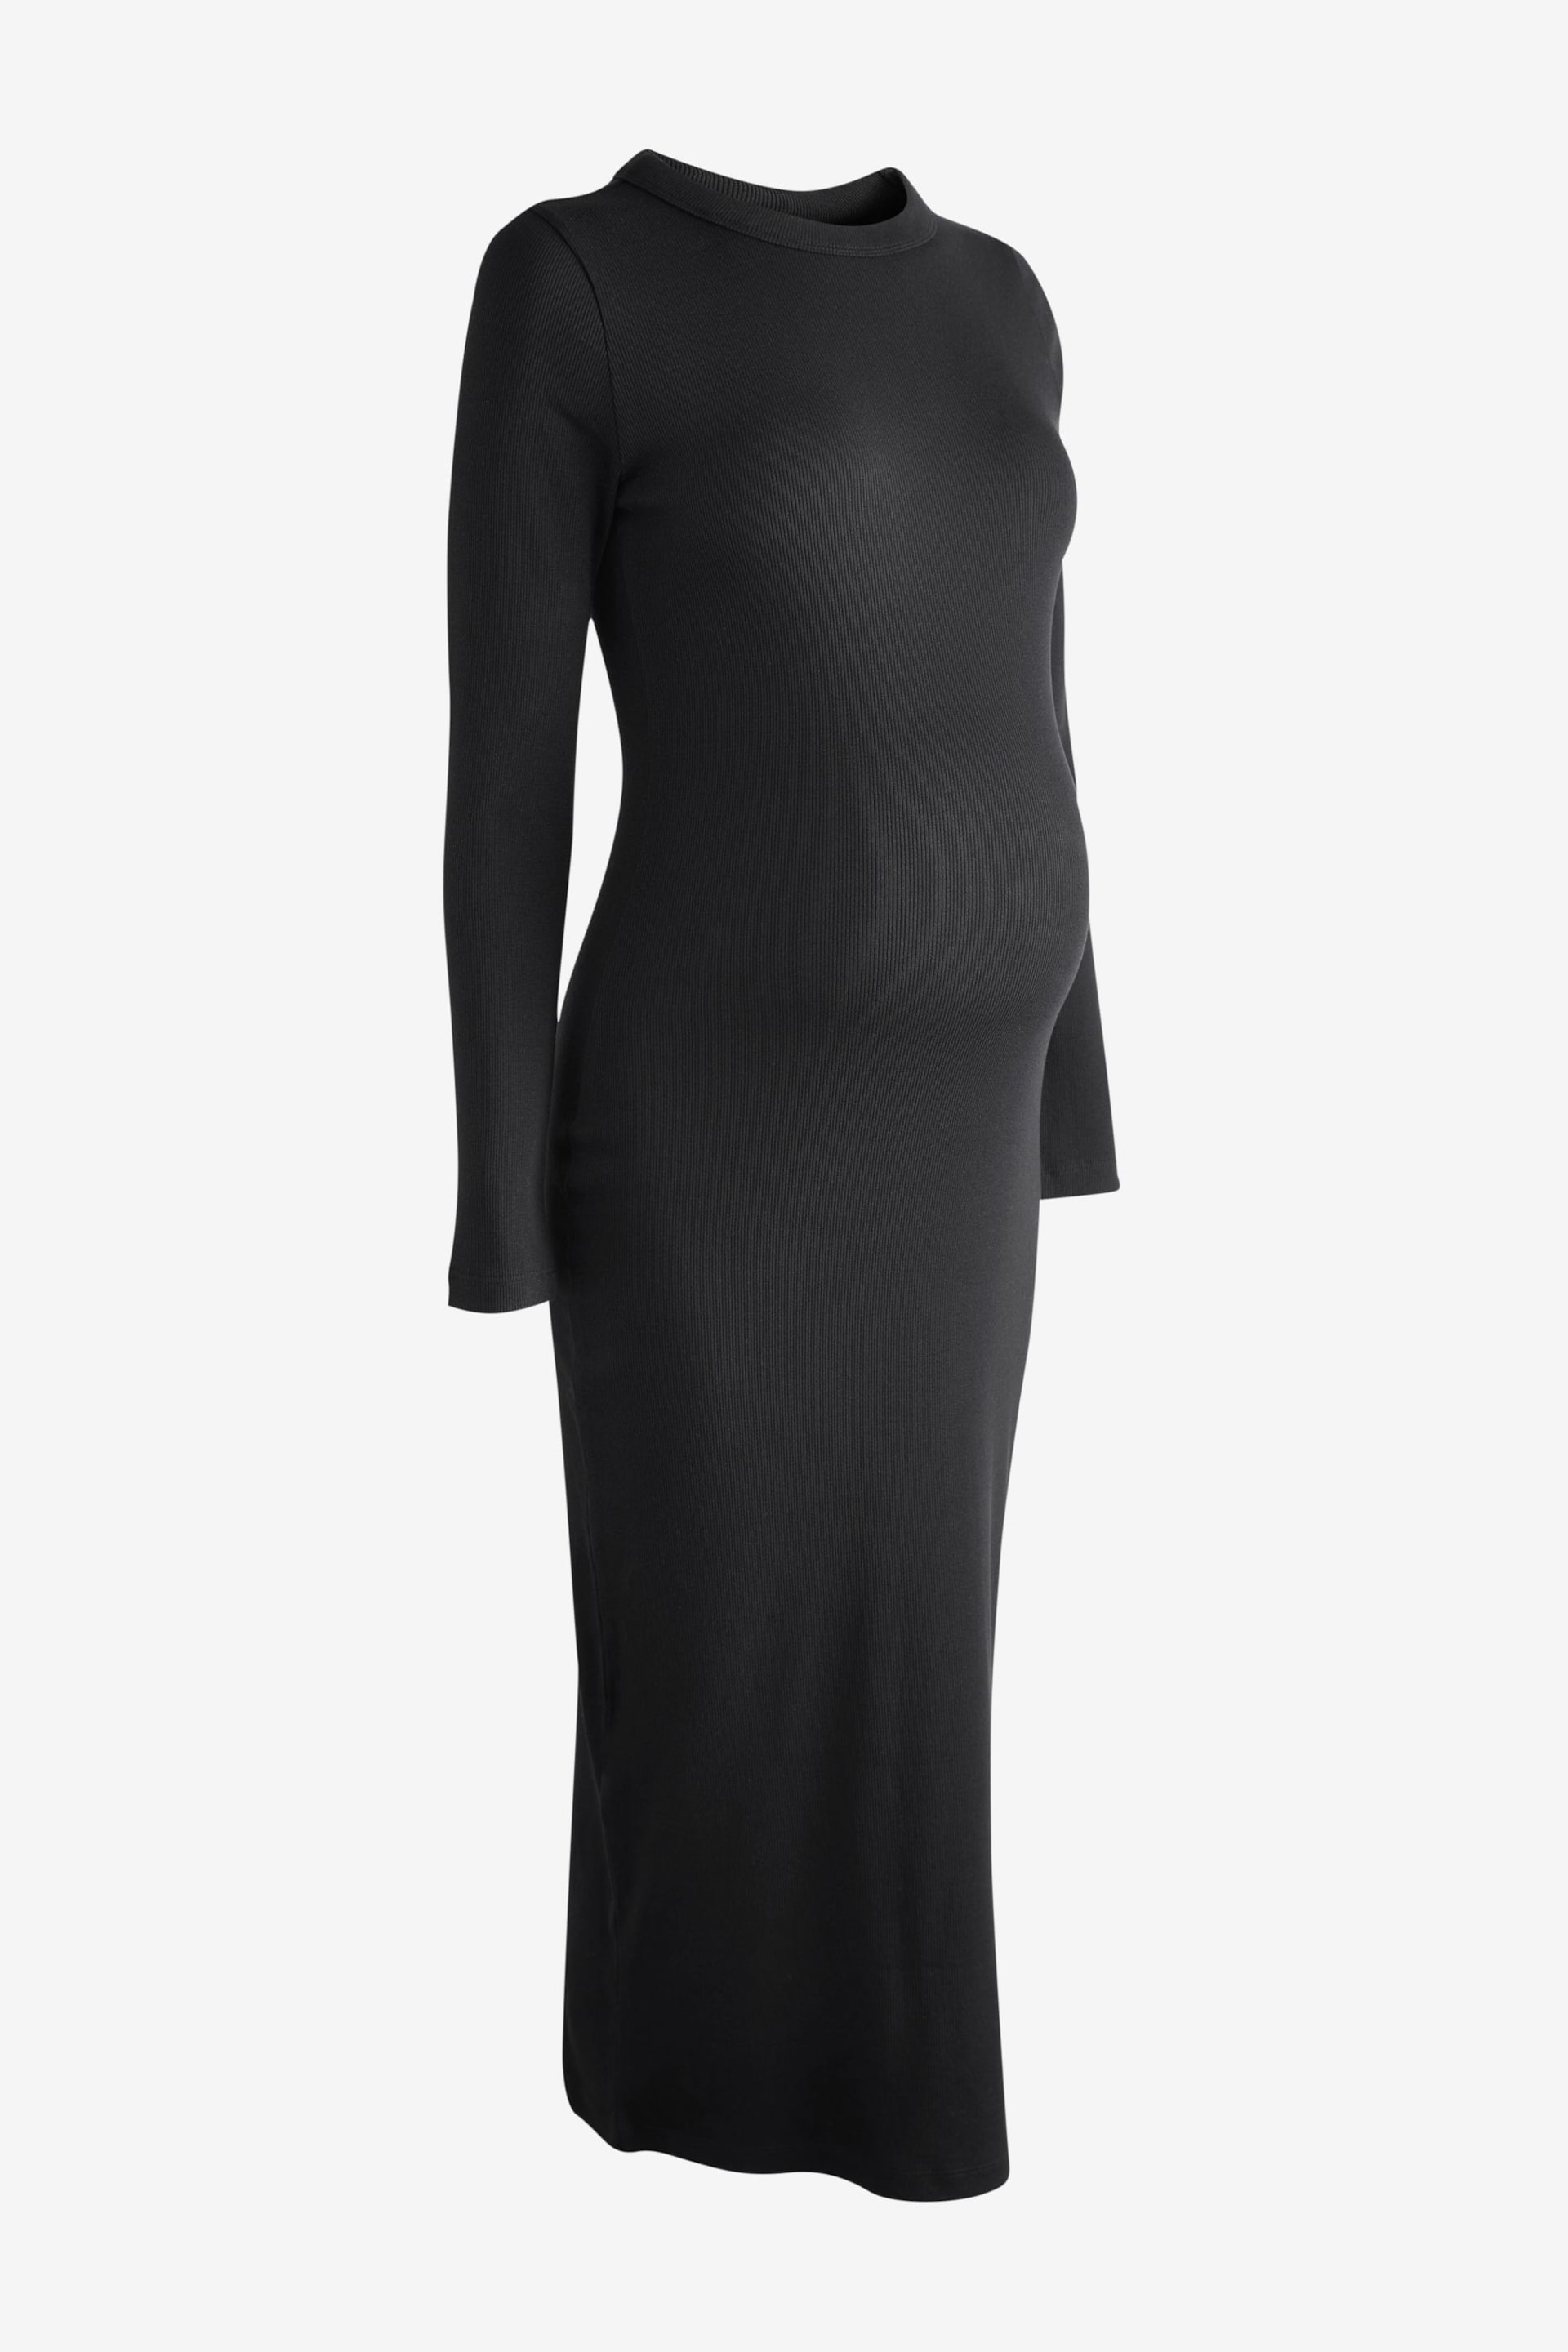 Black Maternity Long Sleeve Dress - Image 7 of 8